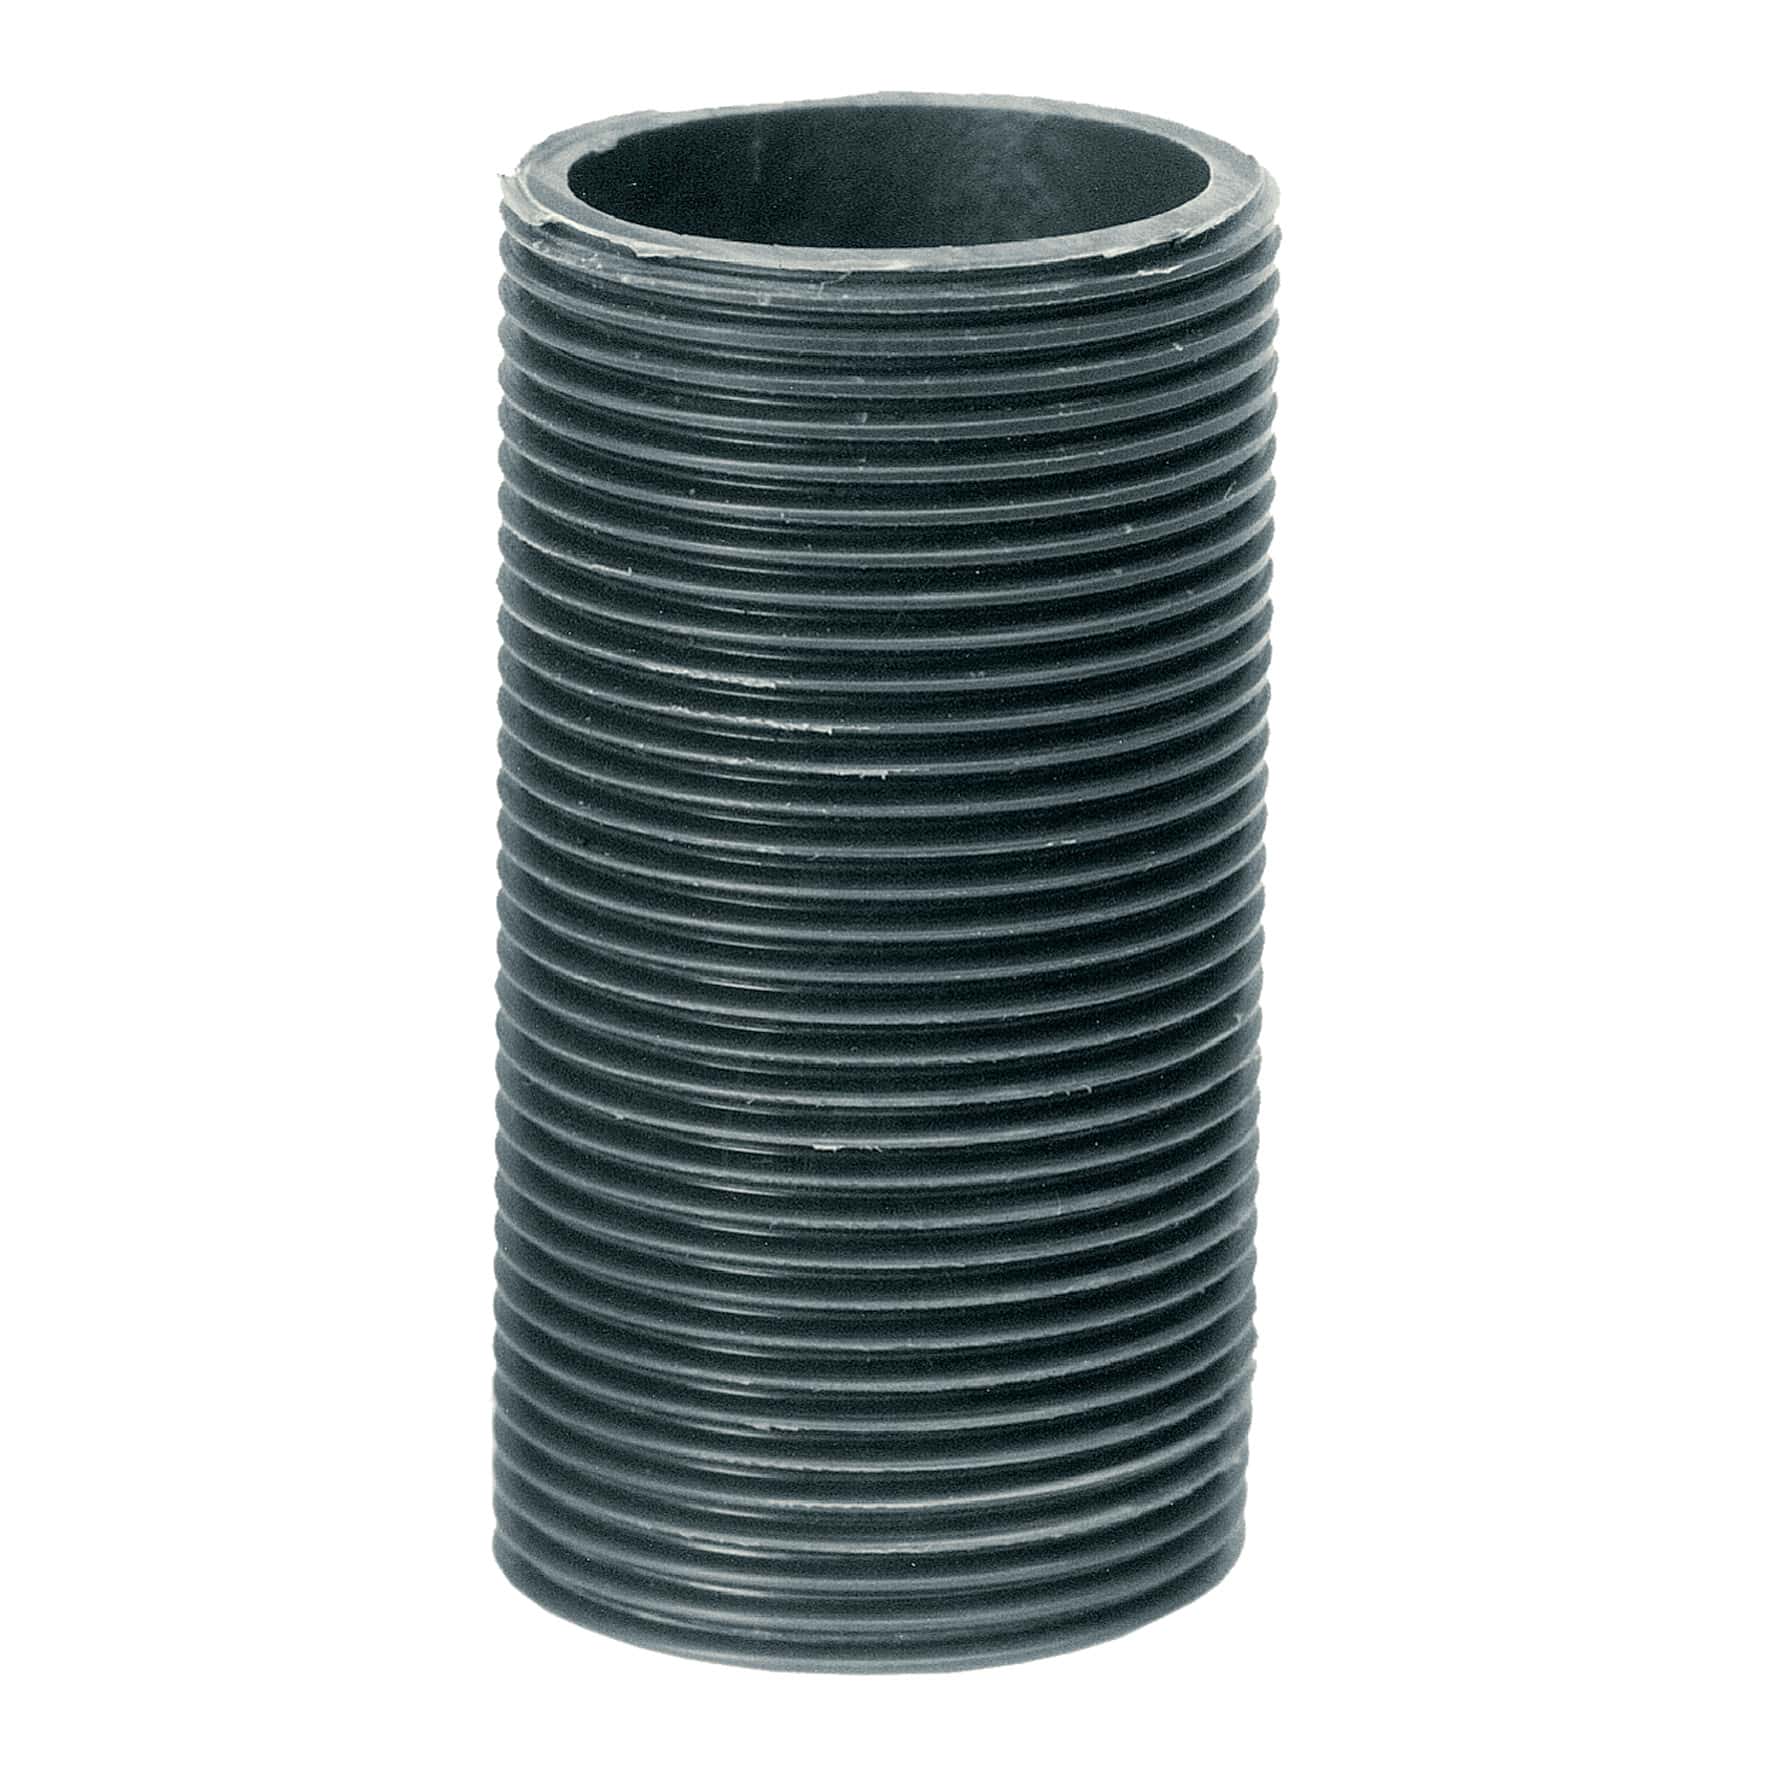 PVC-U barrel nipple BSPP threaded - EFFAST - 100% Made in Italy